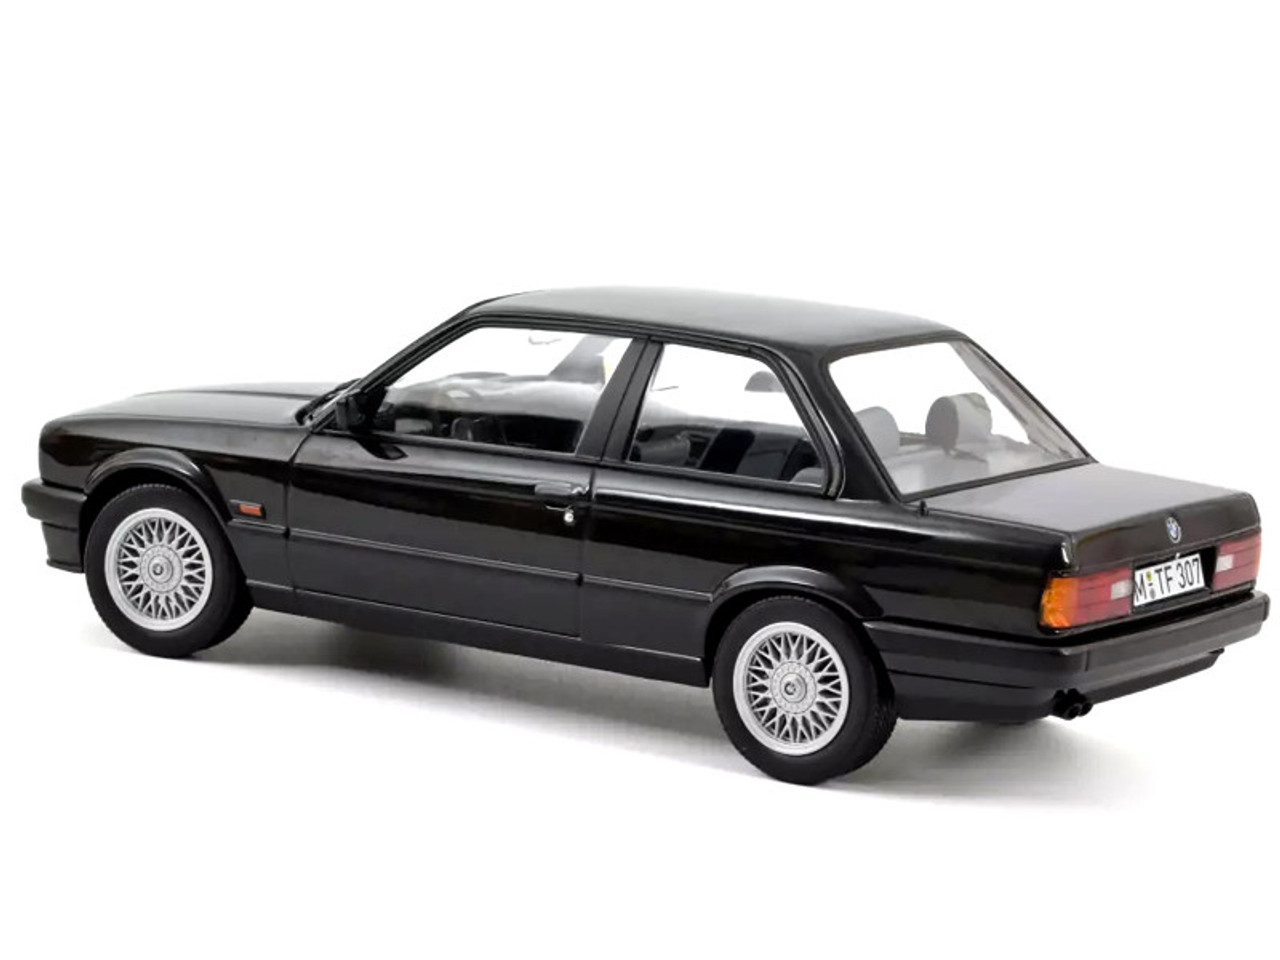 1/18 Norev 1988 BMW 325i Diamond Black Metallic Diecast Car Model